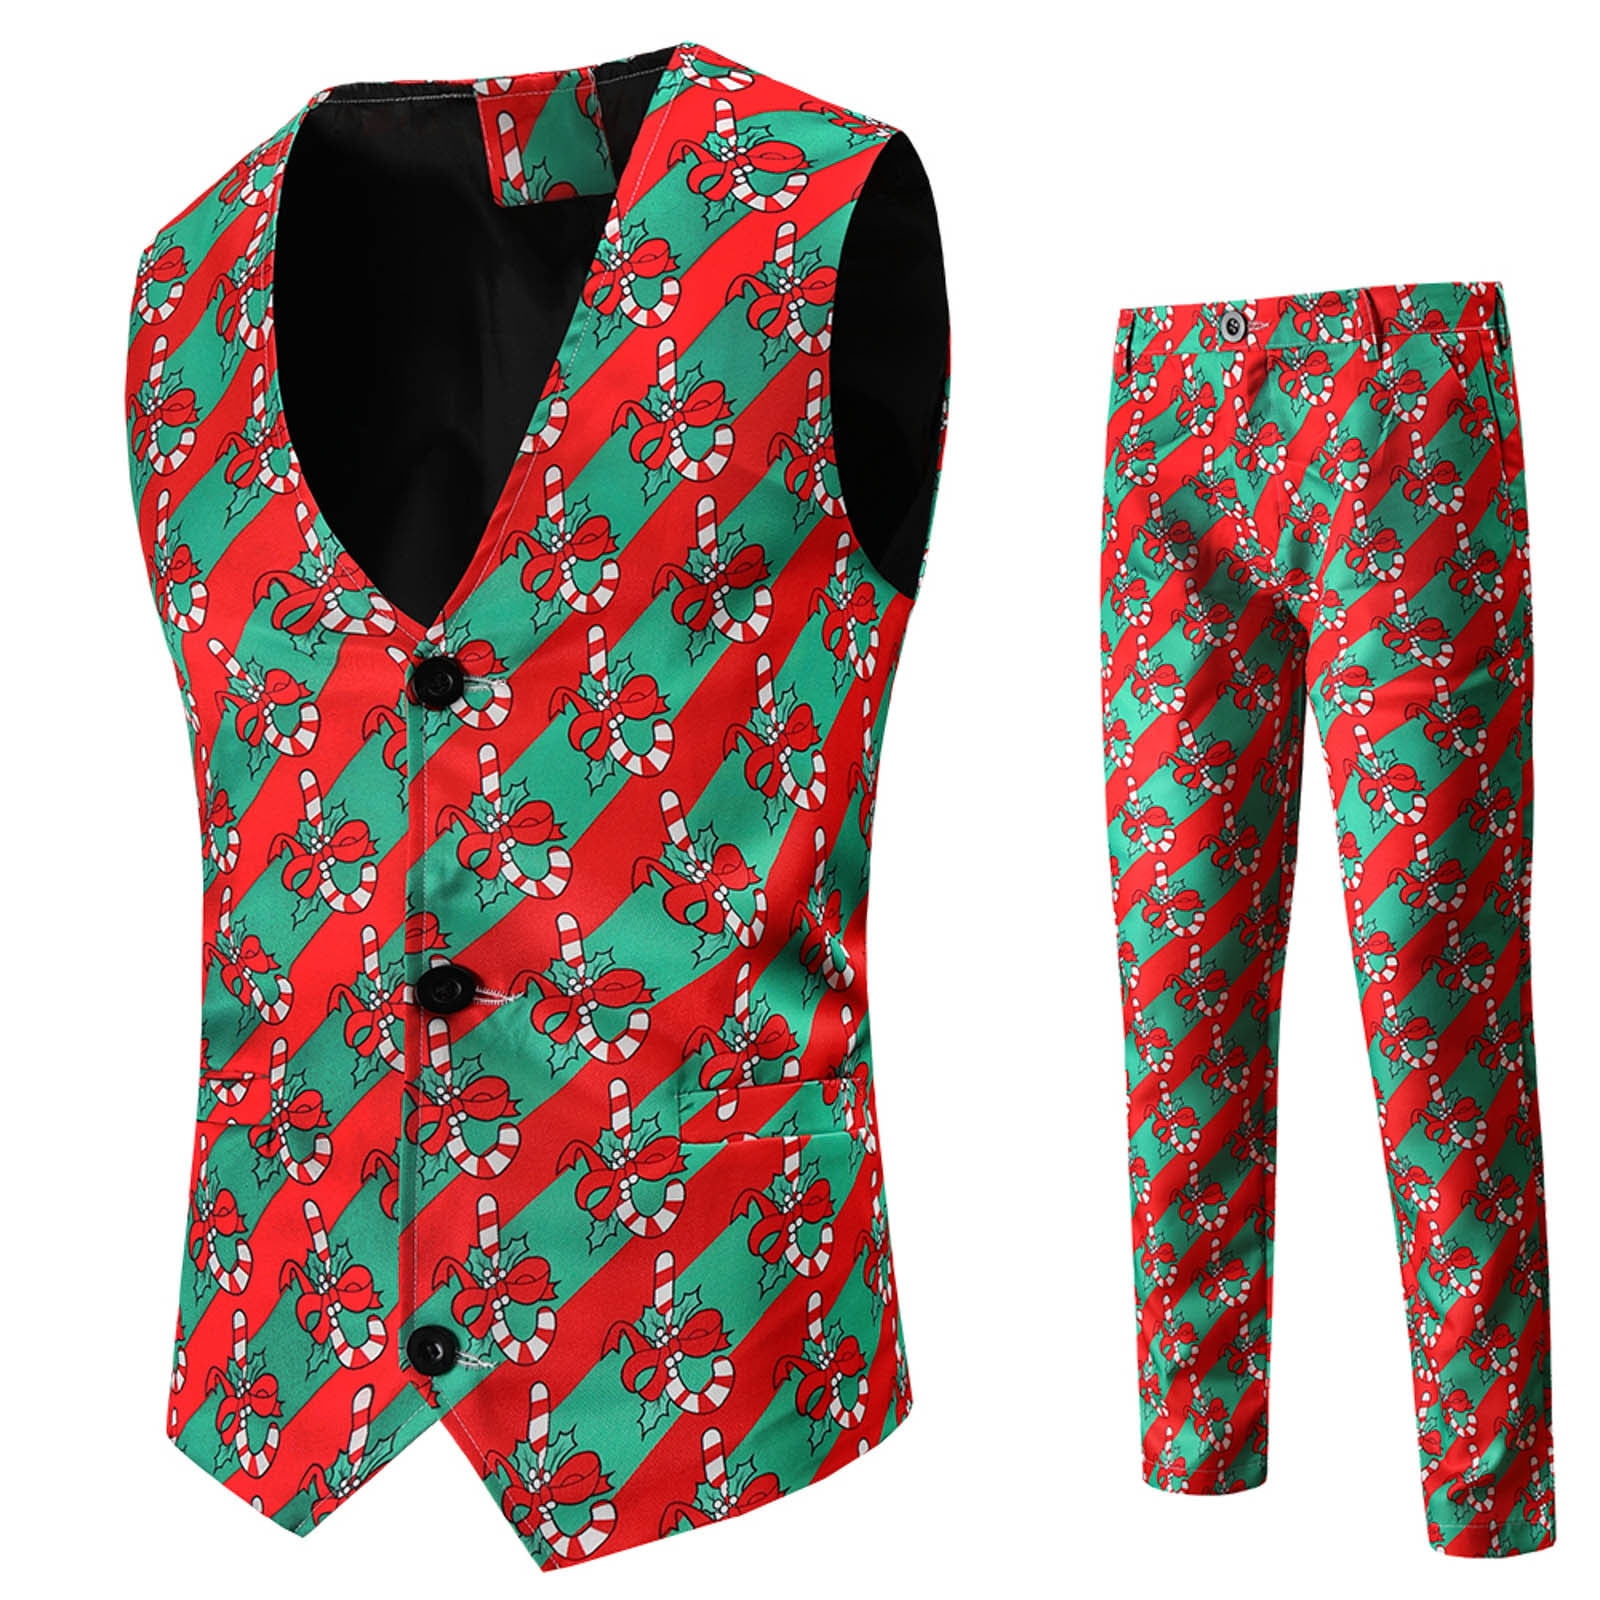 8QIDA Men's Suit Jackets Slim Fit Men Fashion Print Christmas Printed ...